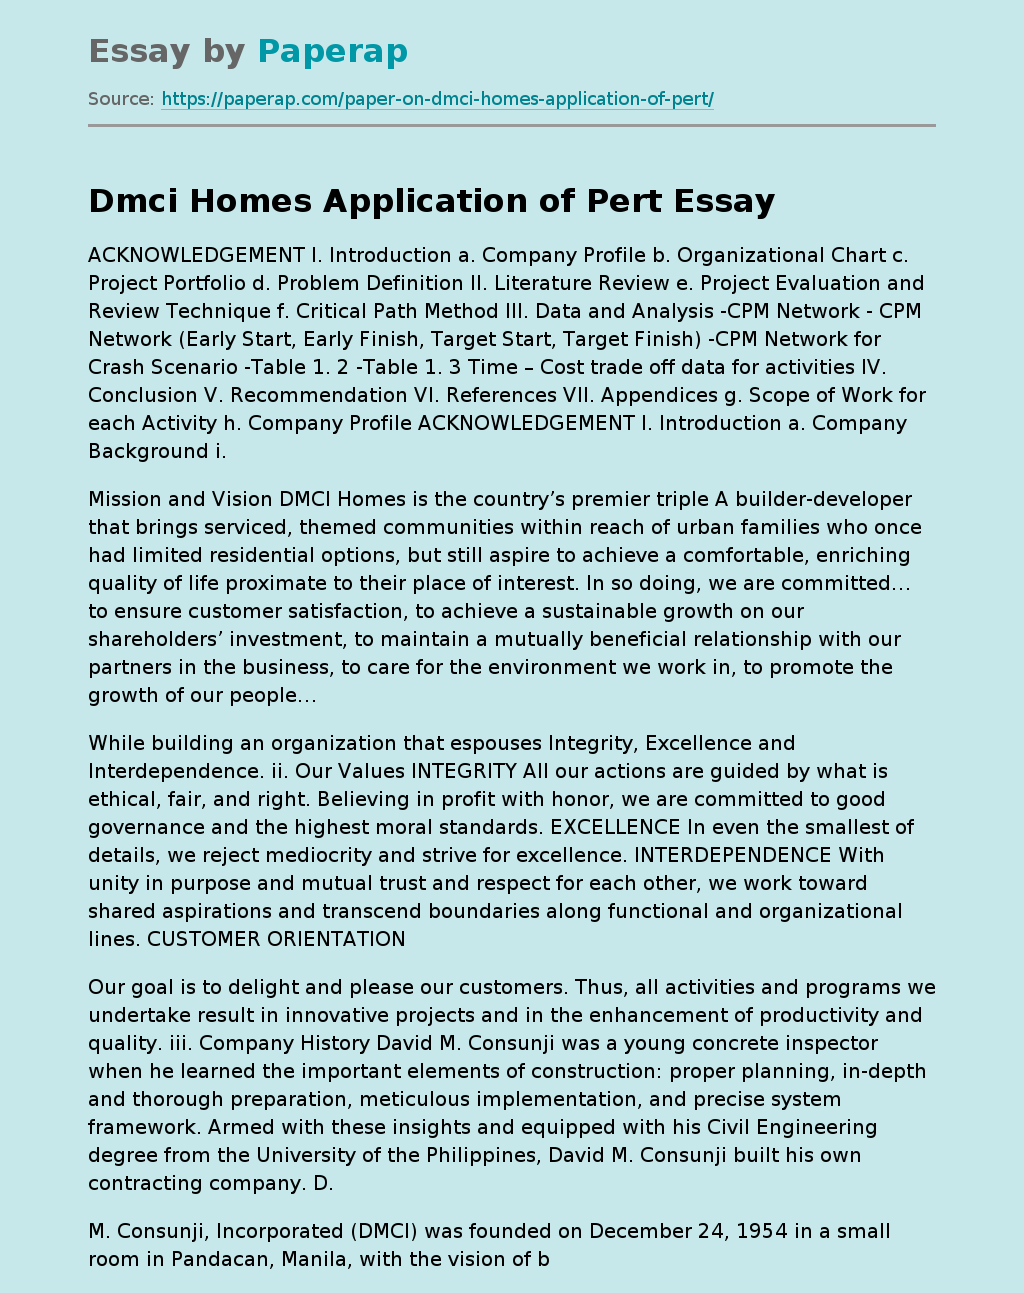 Dmci Homes Application of Pert